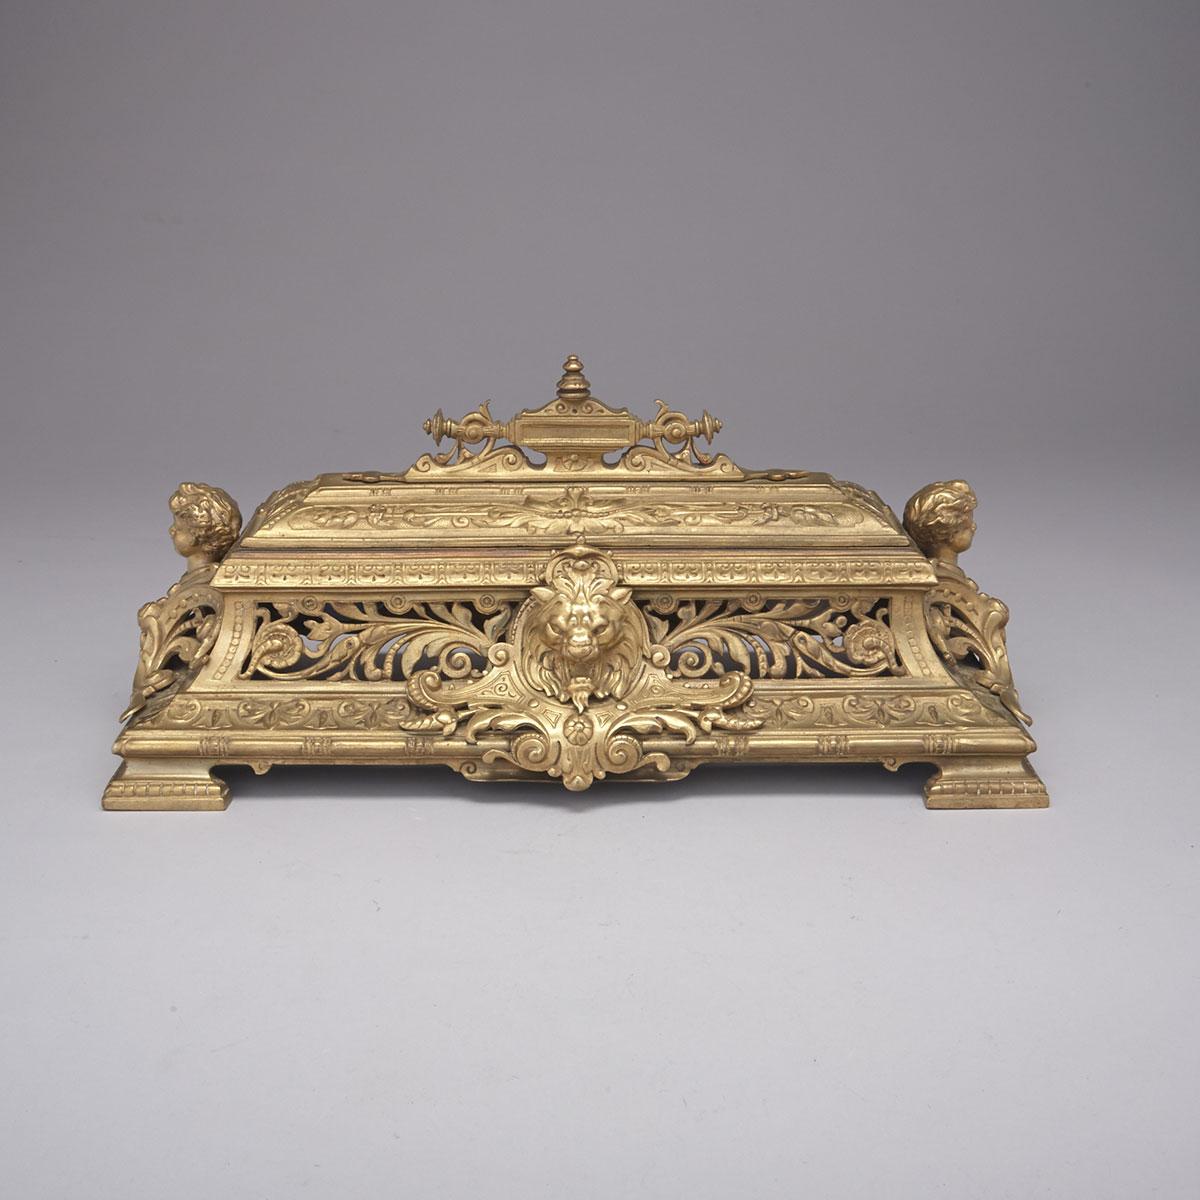 French Renaissance Revival Gilt Bronze Desk Stand, c.1870